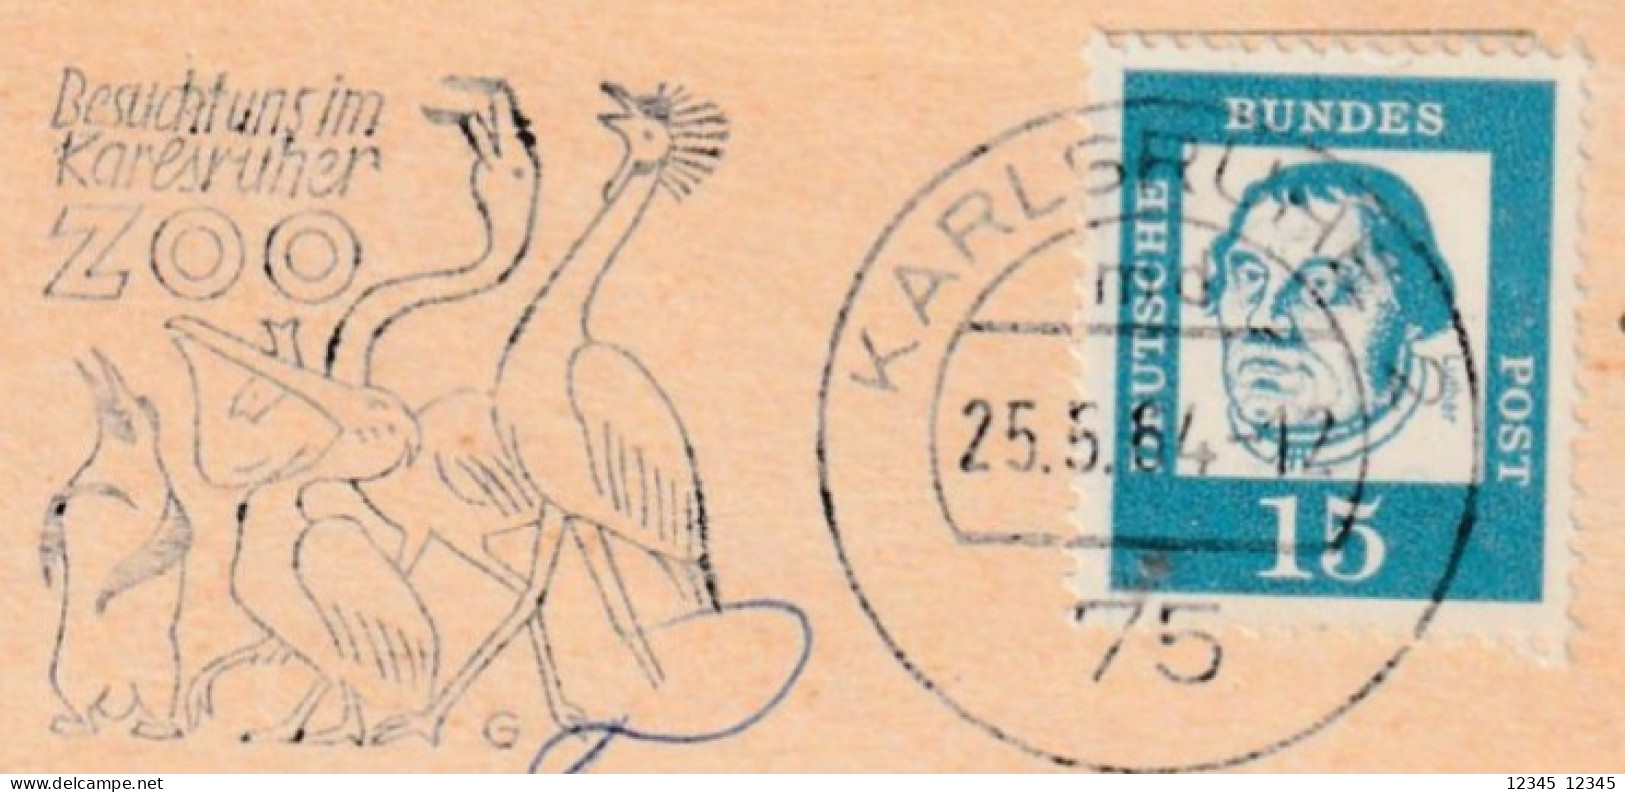 Duitsland 1964, Stamped Bird Motive (Besucht Uns Im Karlsruher Zoo) - Lettres & Documents